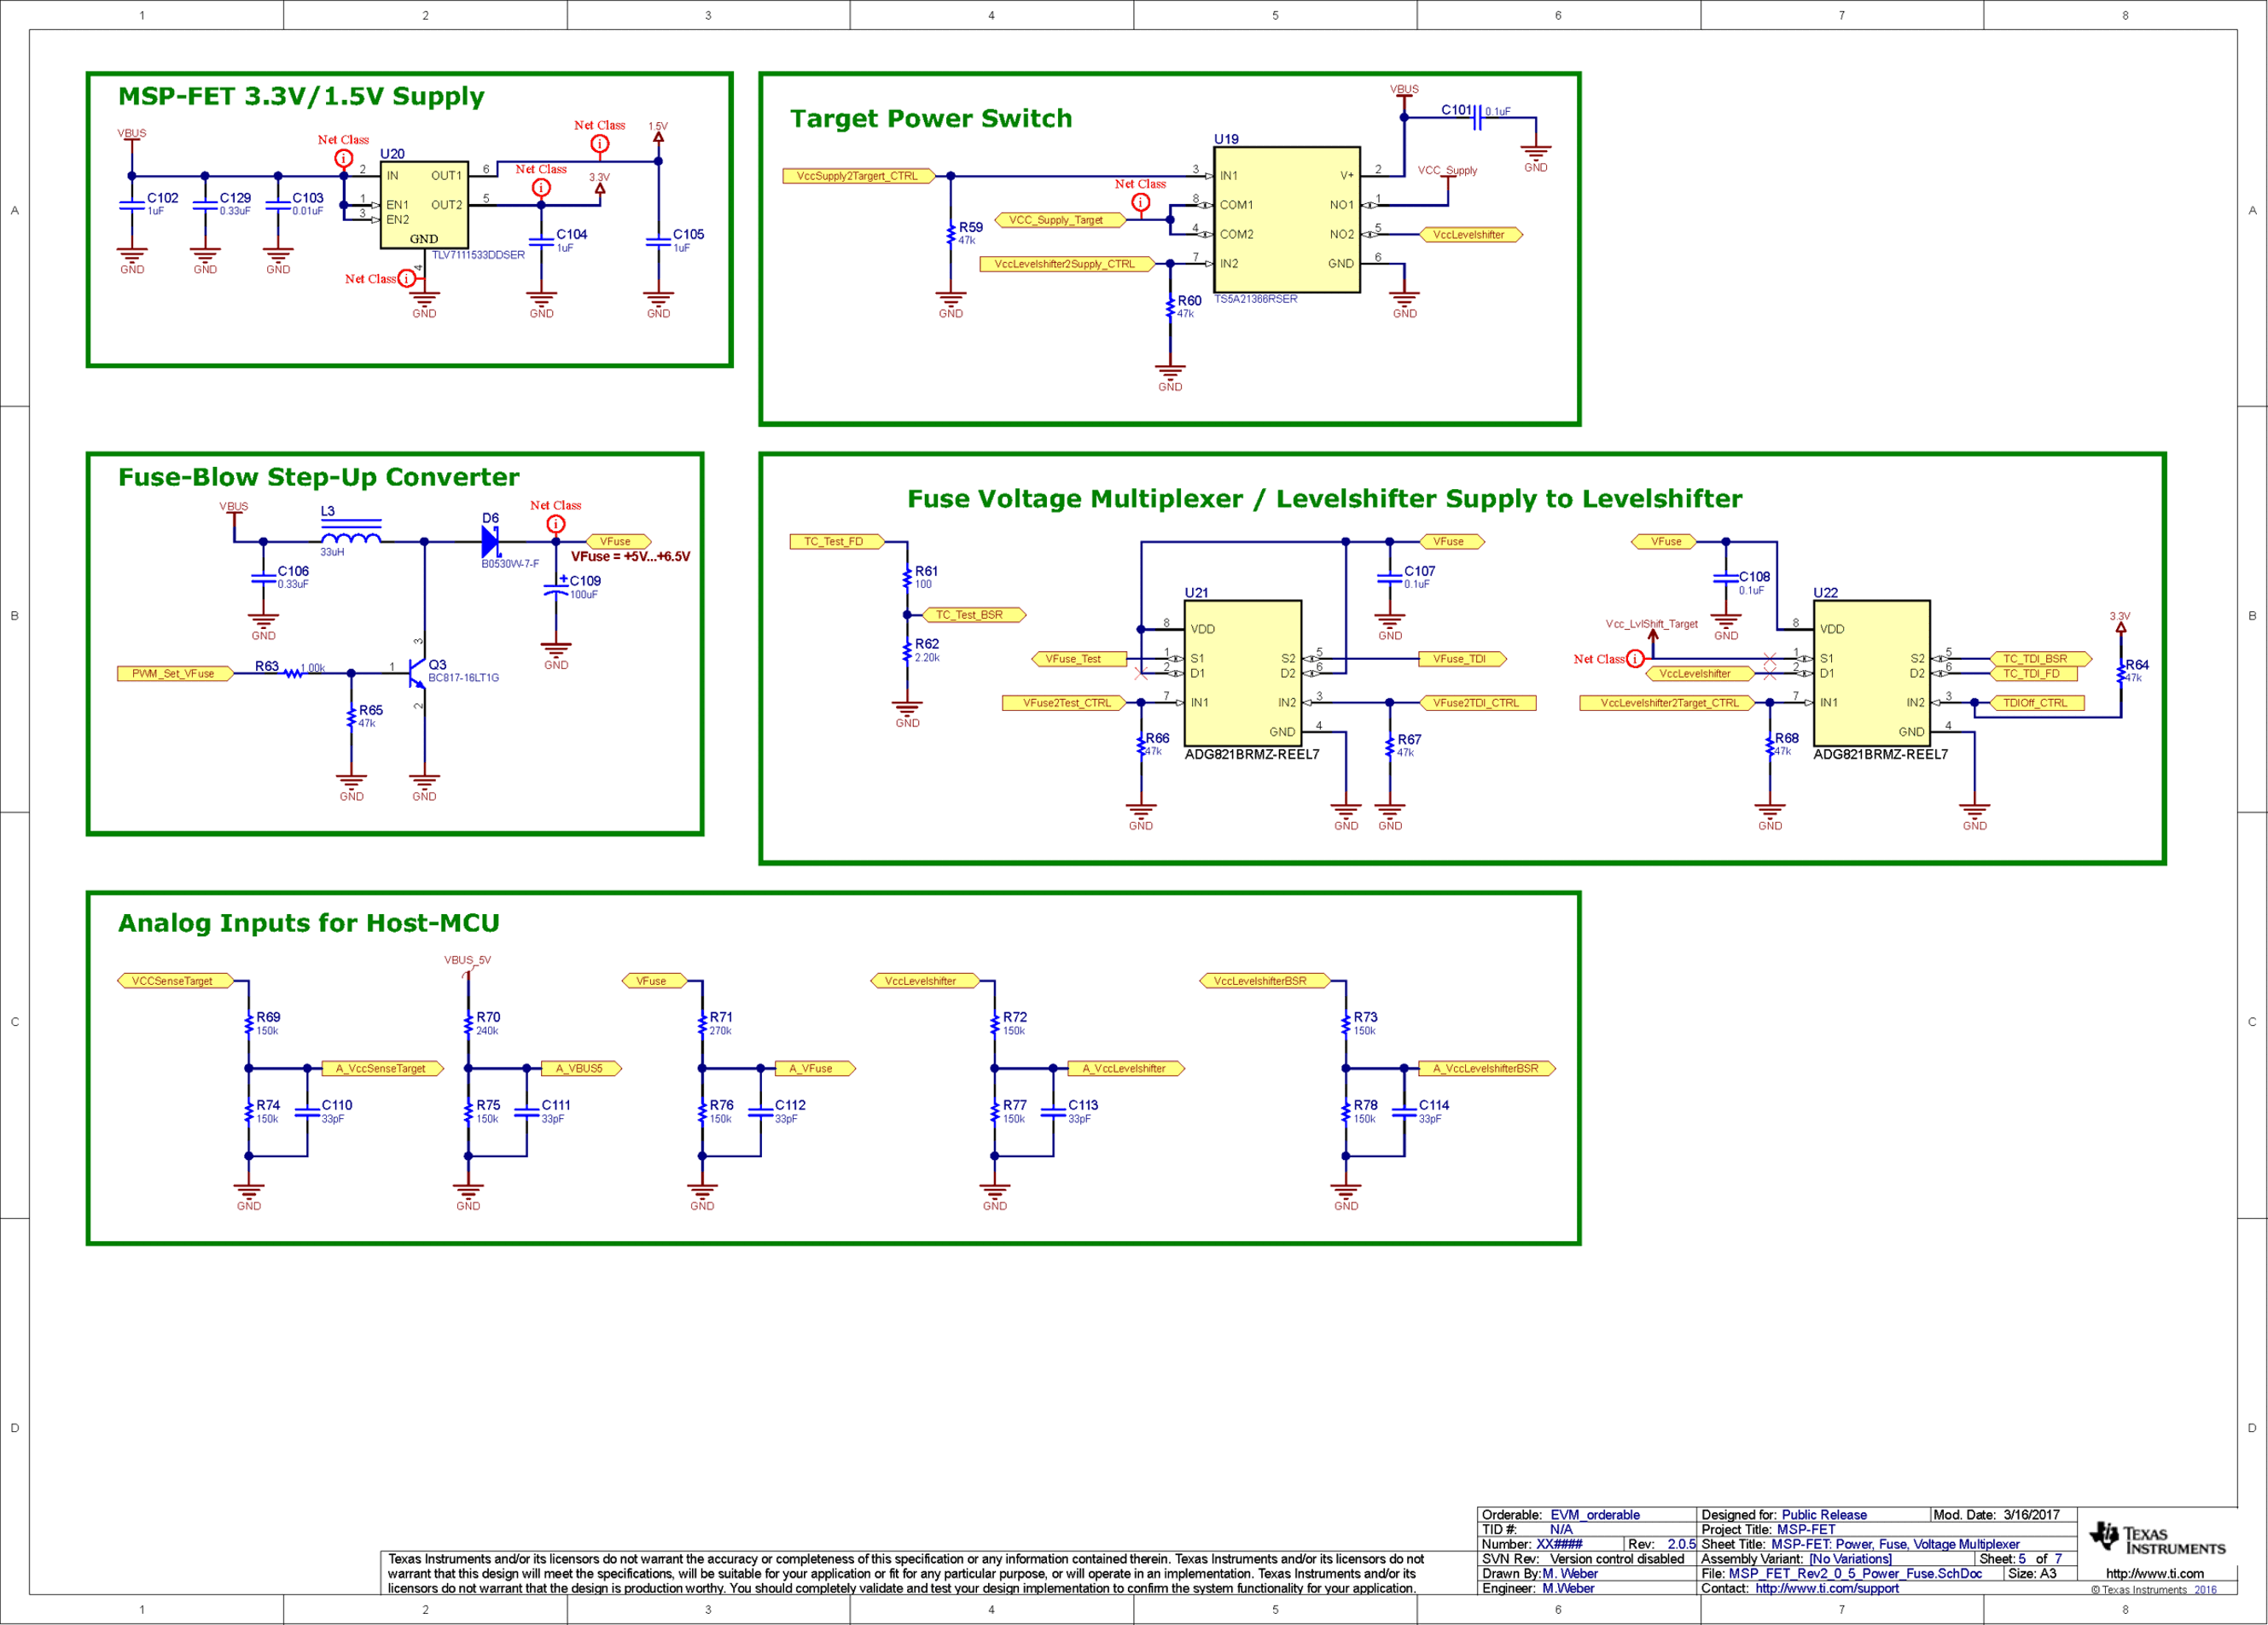 schematic-msp-fet-rev2p5-5.png